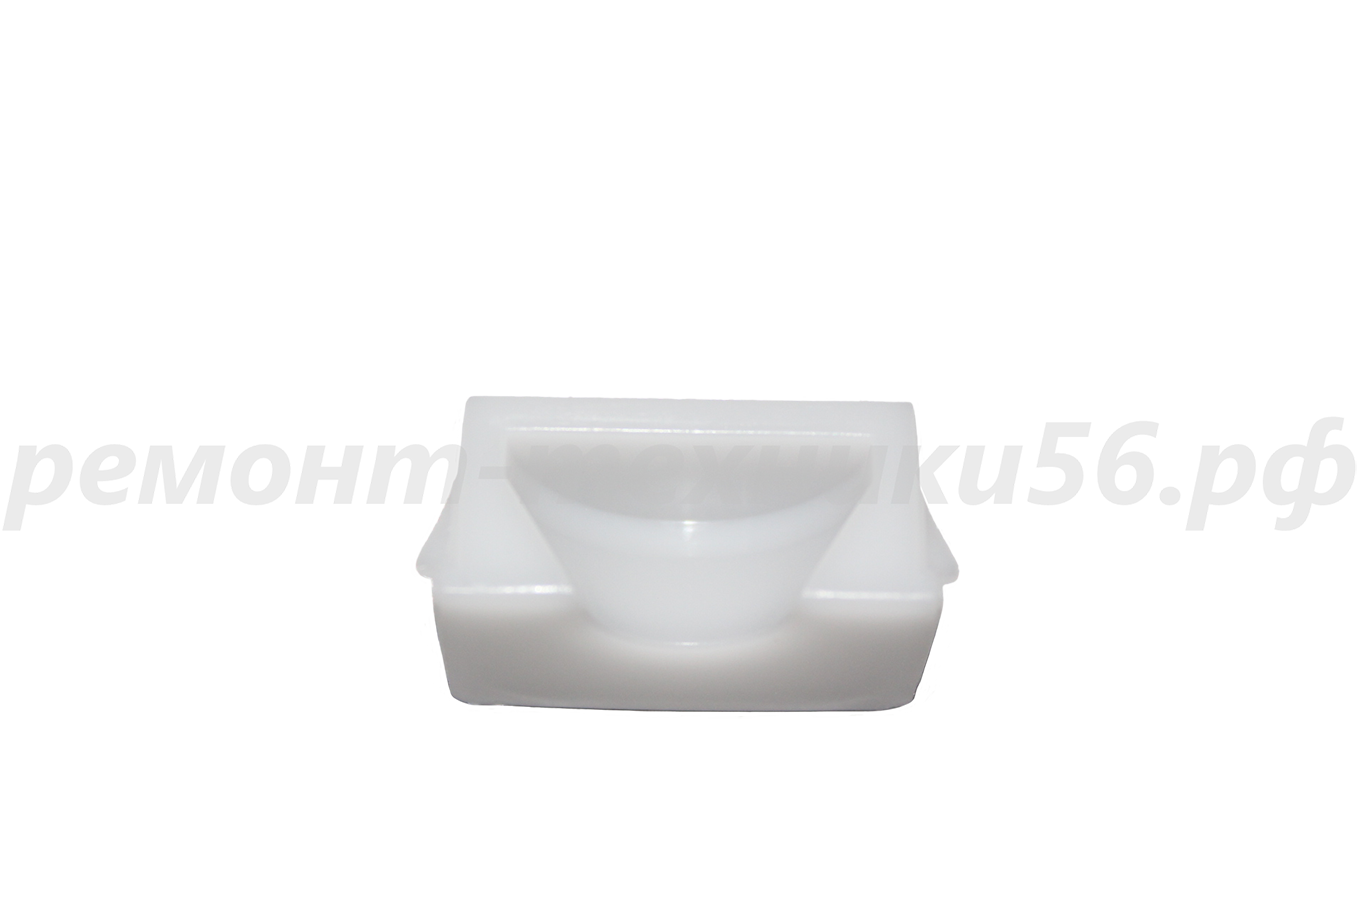 Подшипник скольжения передний Electrolux EHAW - 6515 (white) по лучшей цене фото7